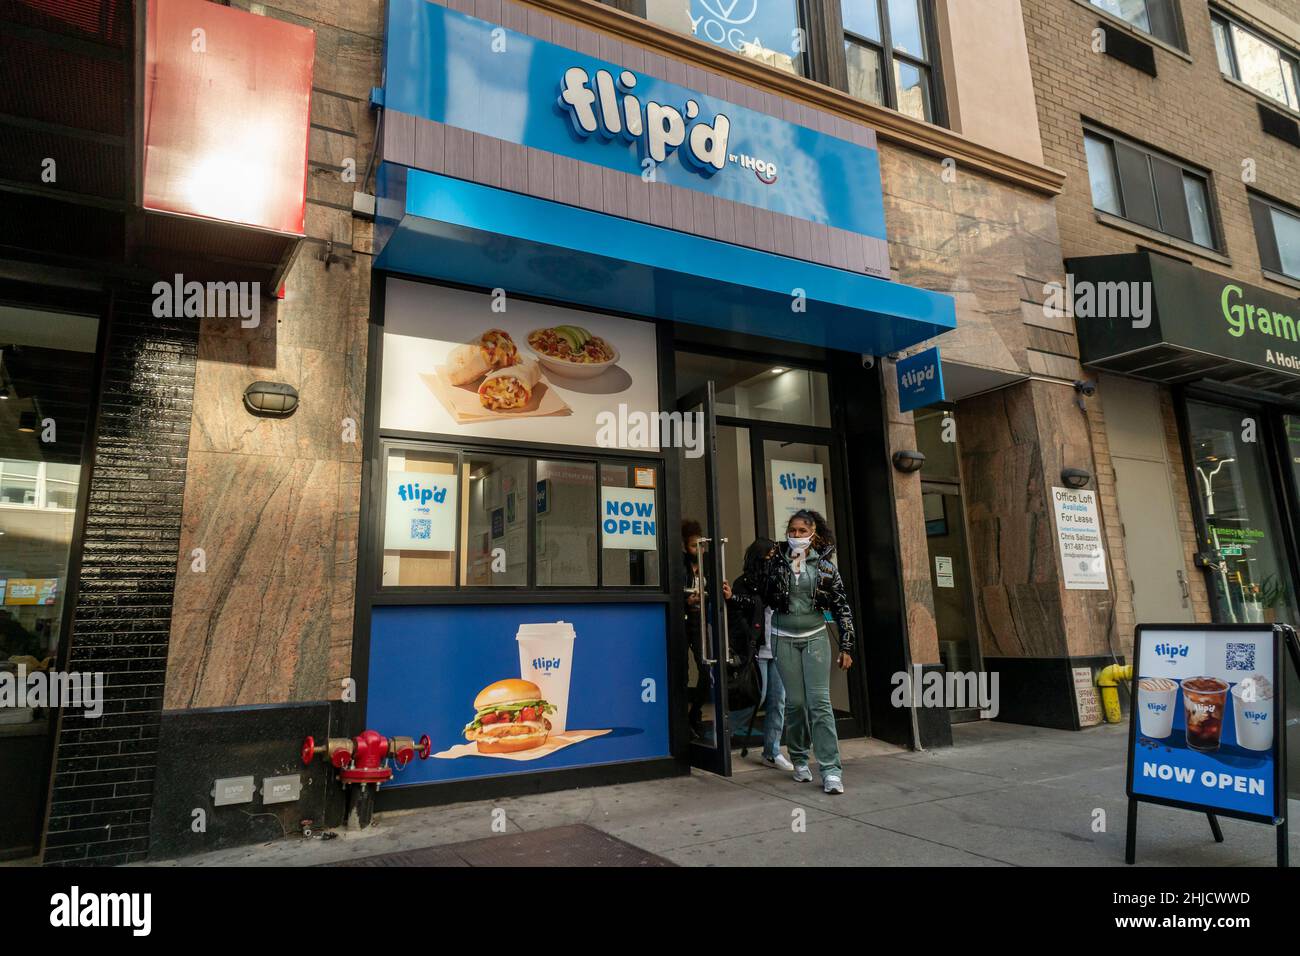 IHOP, Bronx - Kingsbridge - Photos & Restaurant Reviews - Order Online Food  Delivery - Tripadvisor